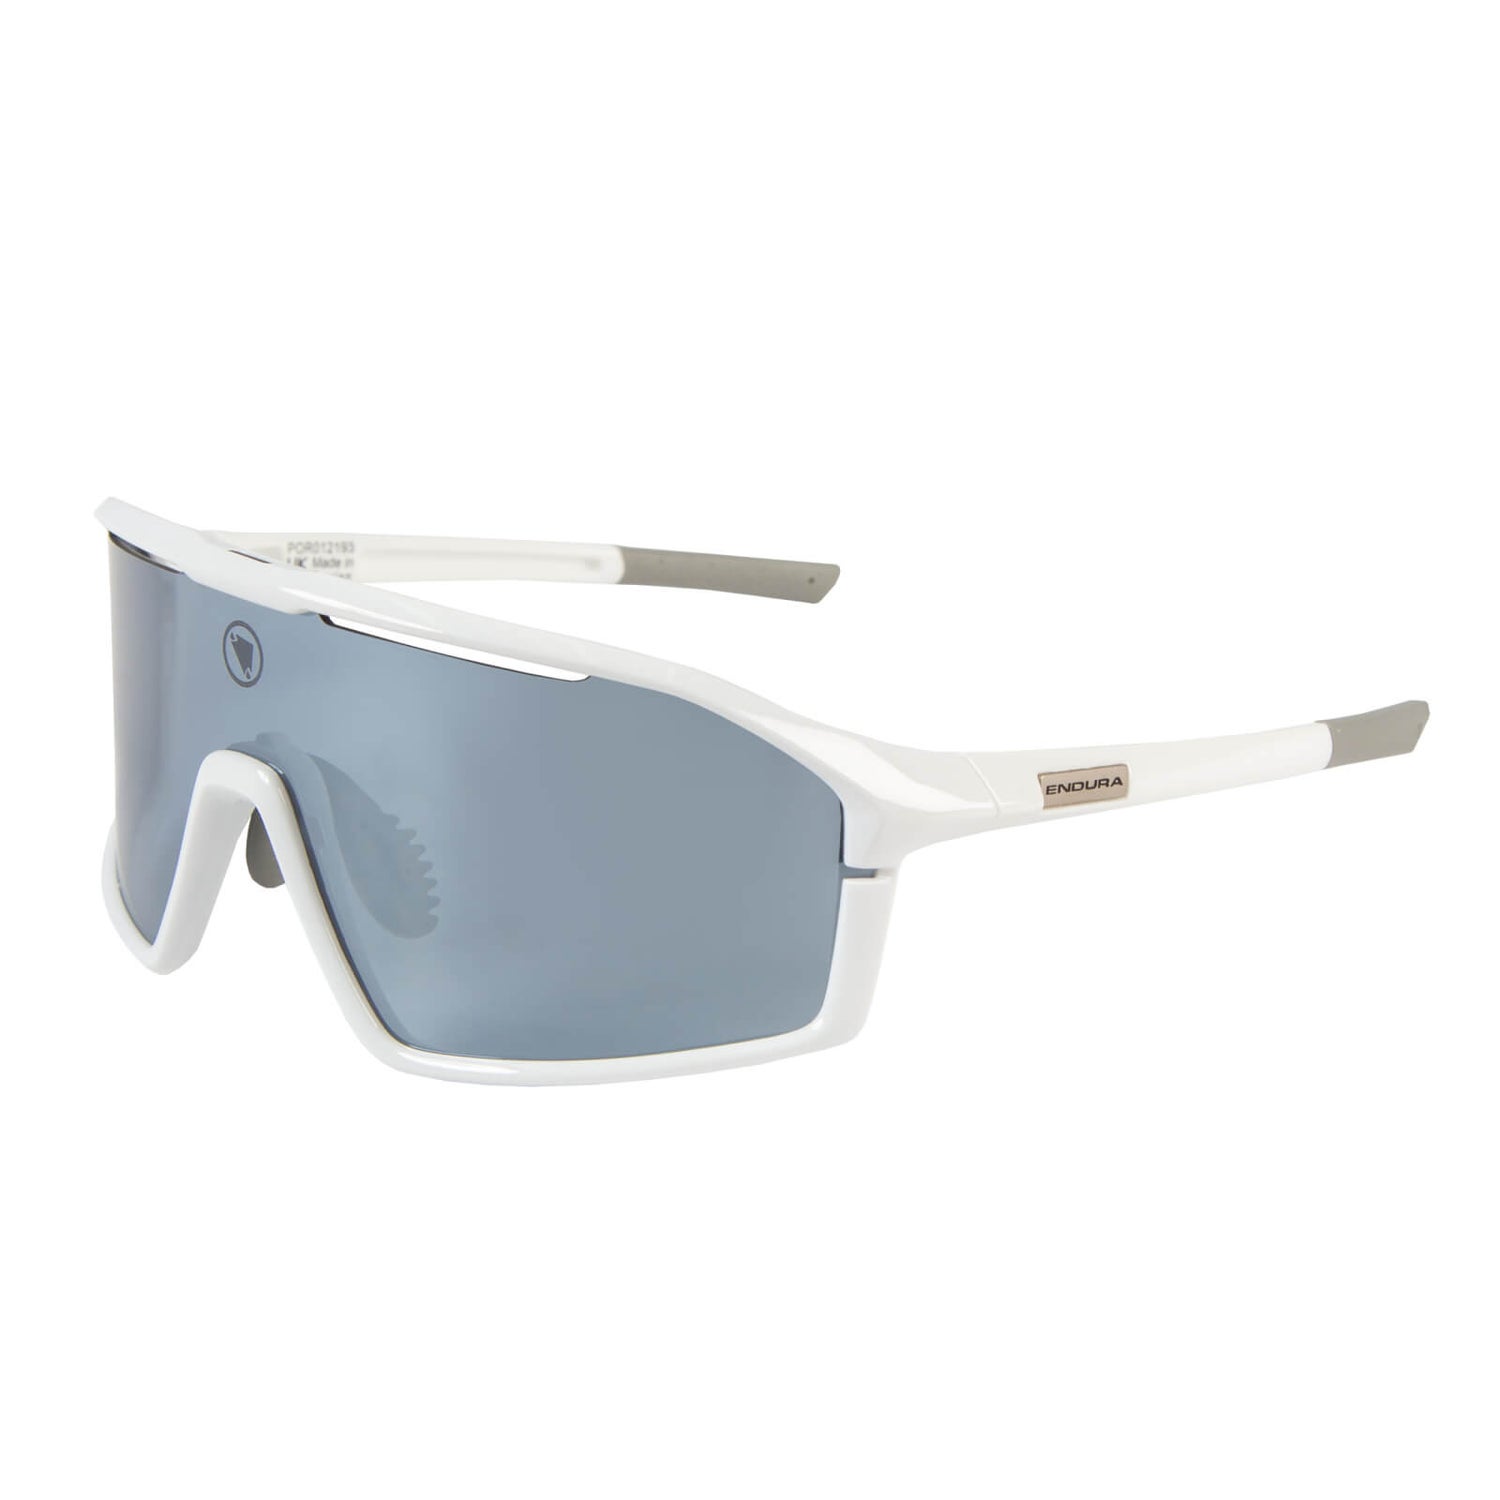 Gabbro II Glasses - White